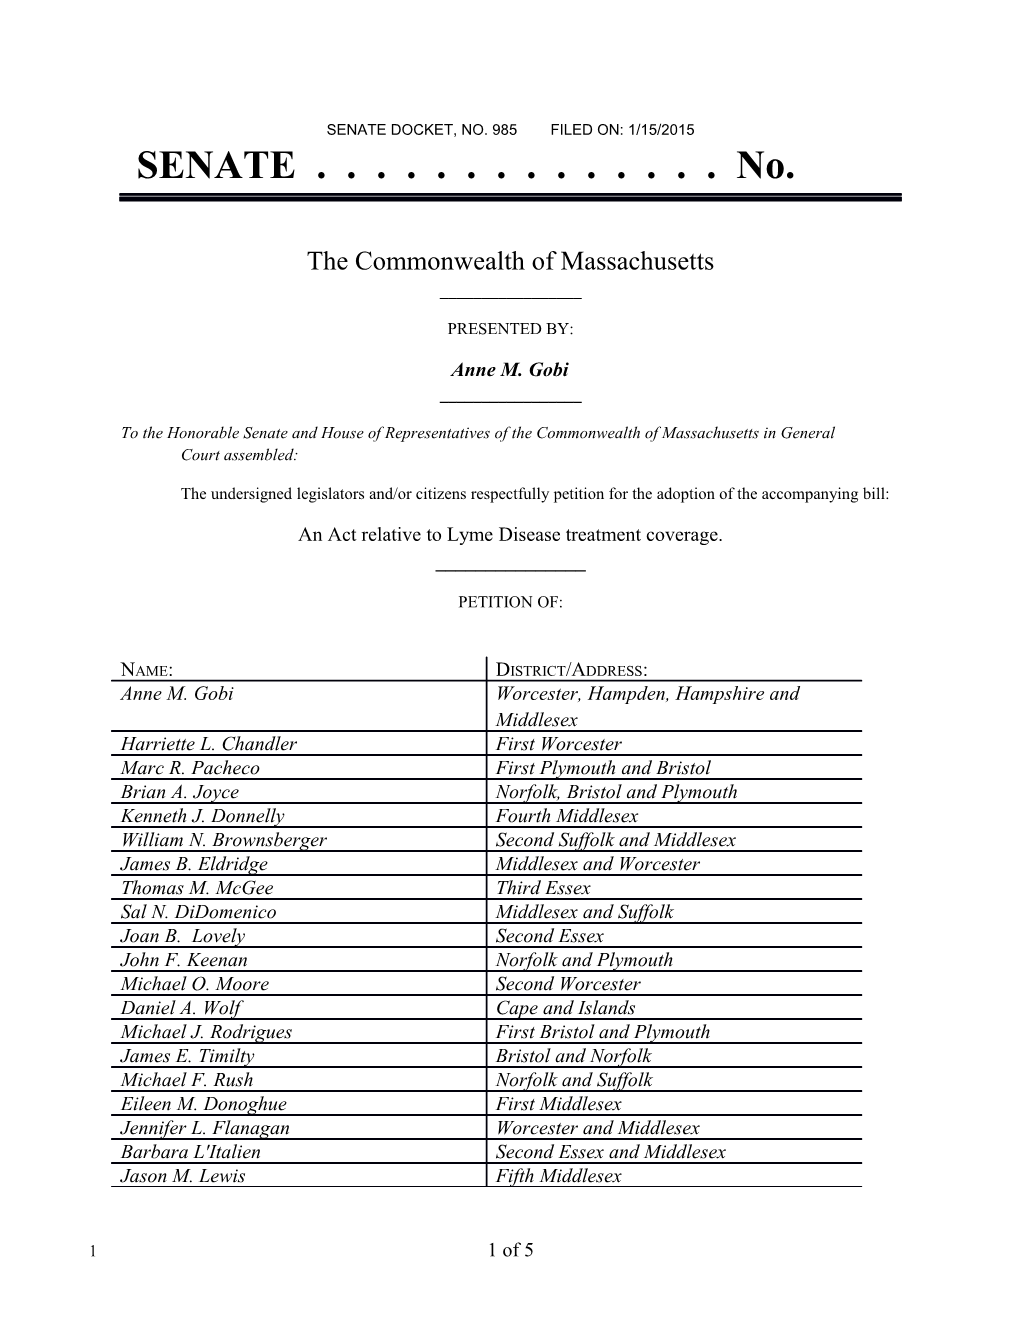 Senate Docket, No. 985 Filed On: 1/15/2015